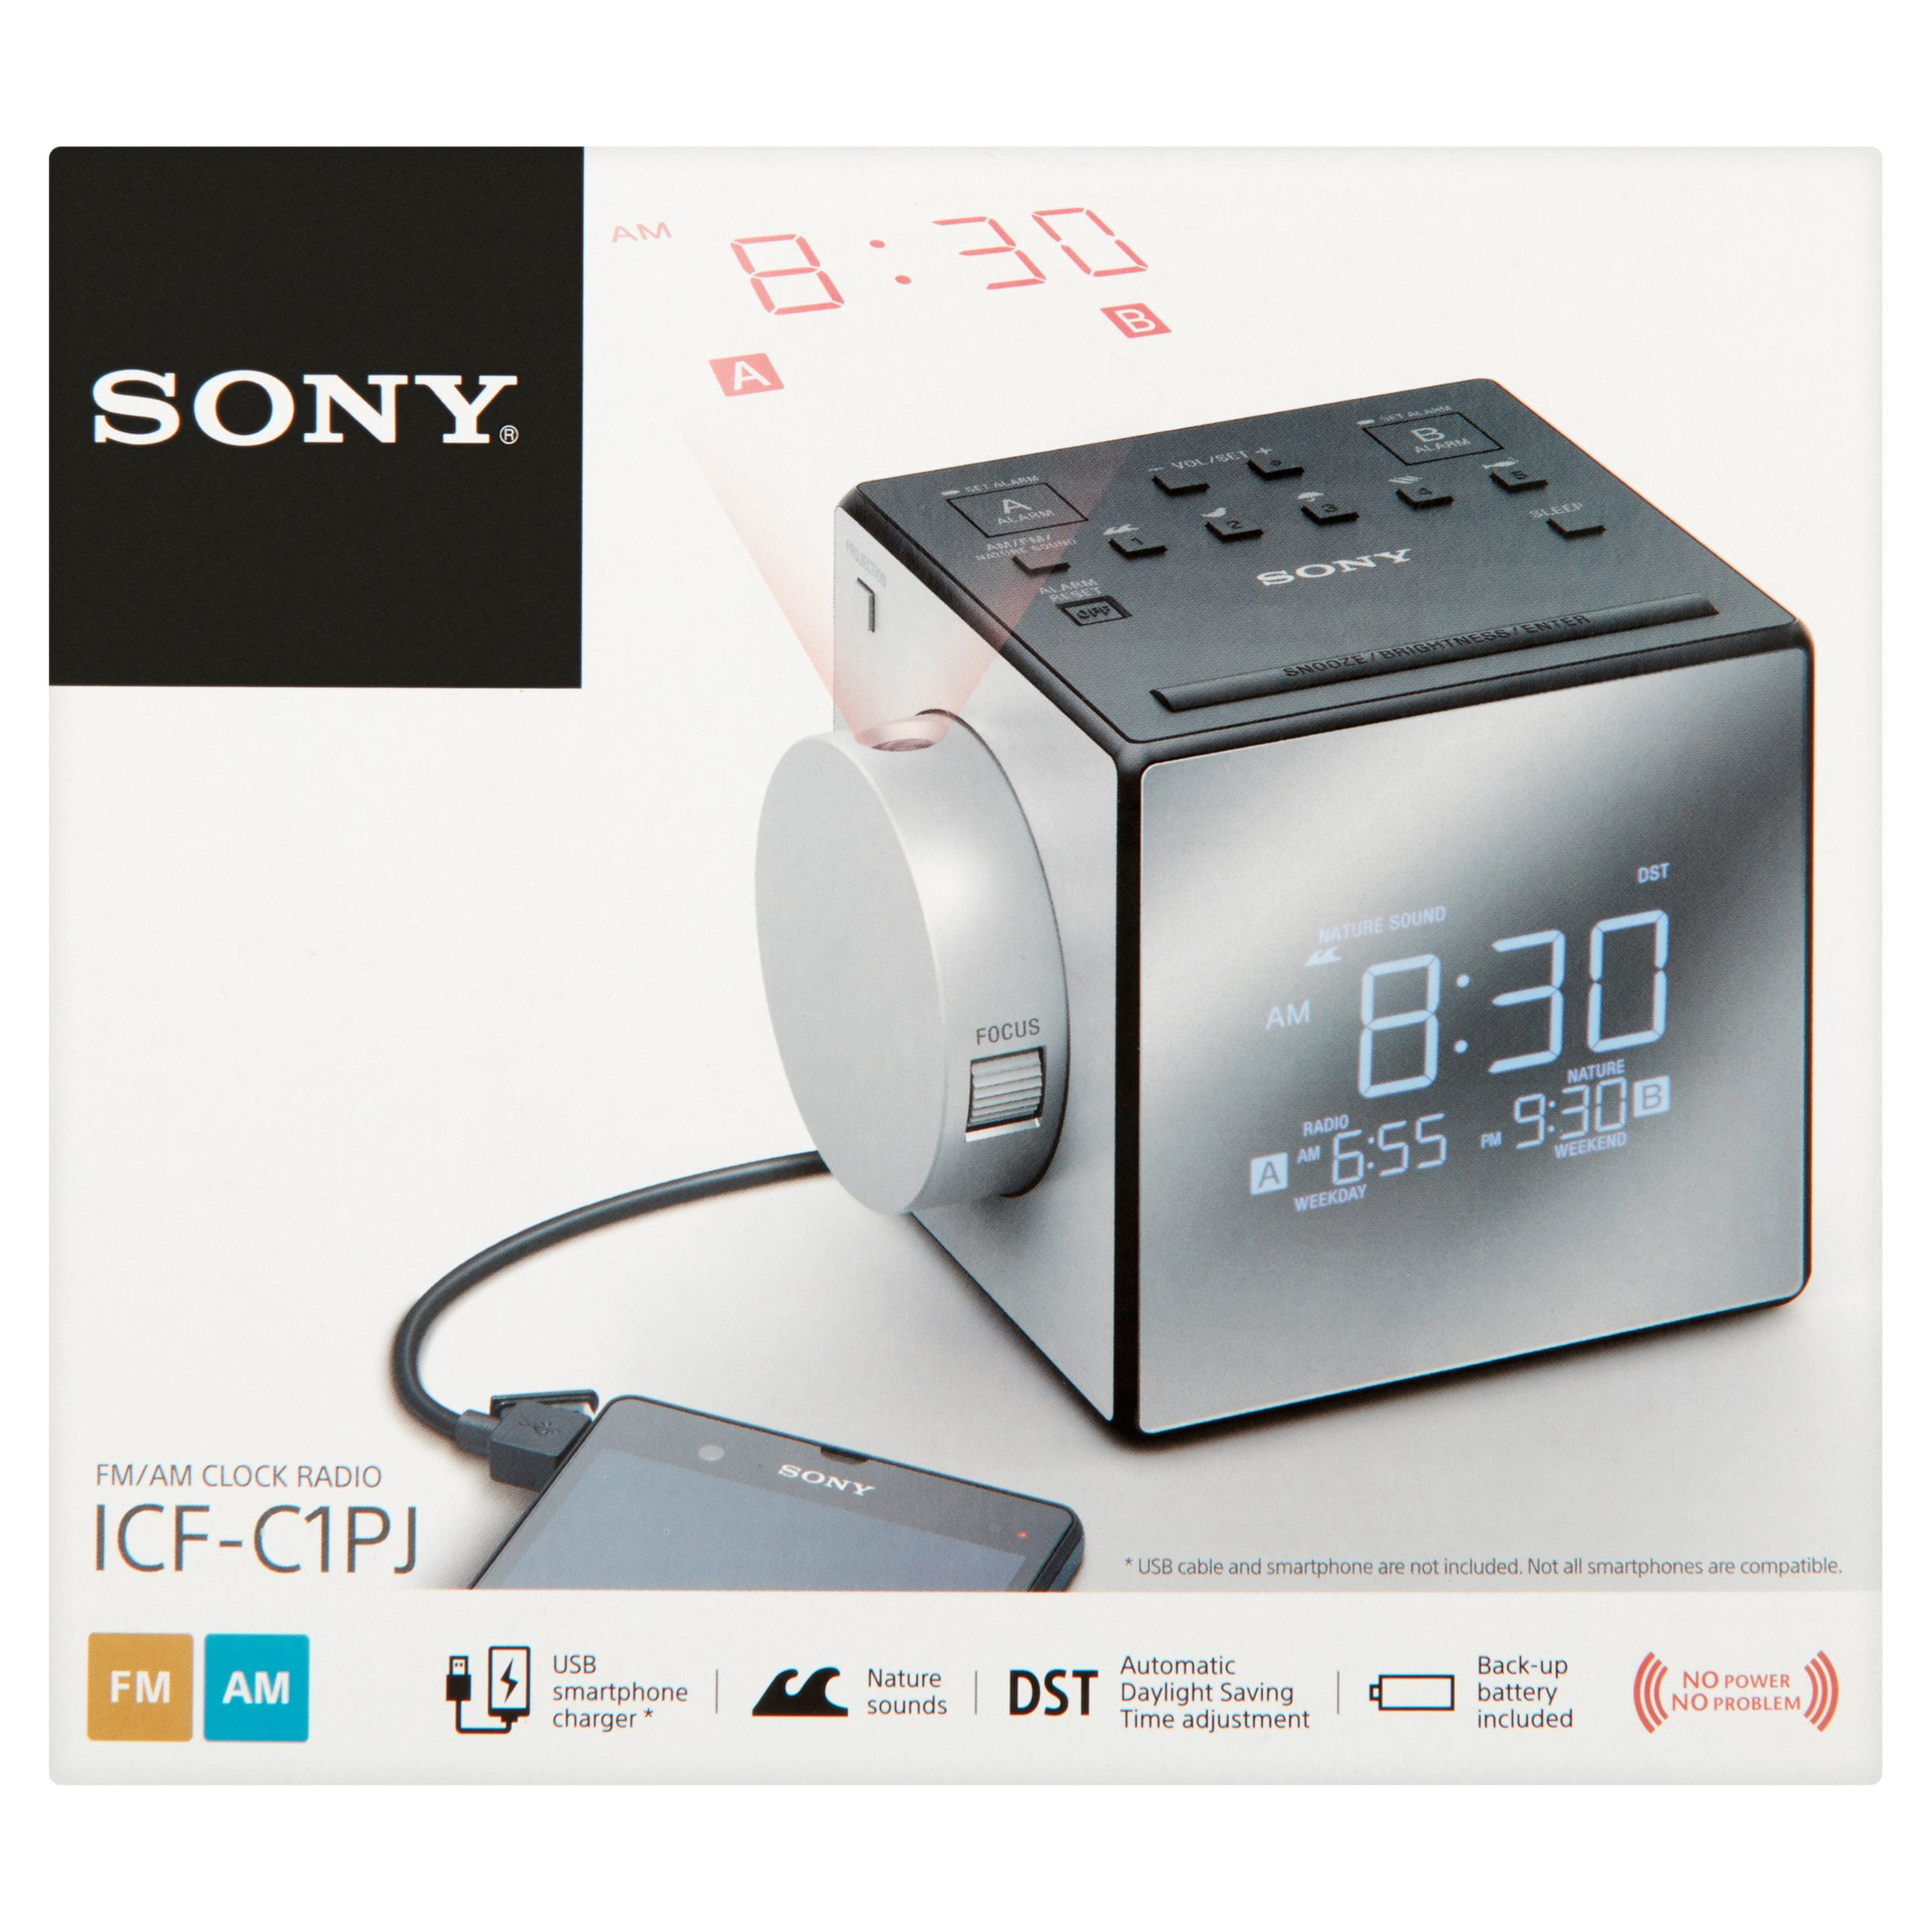 Sony projector clock radio